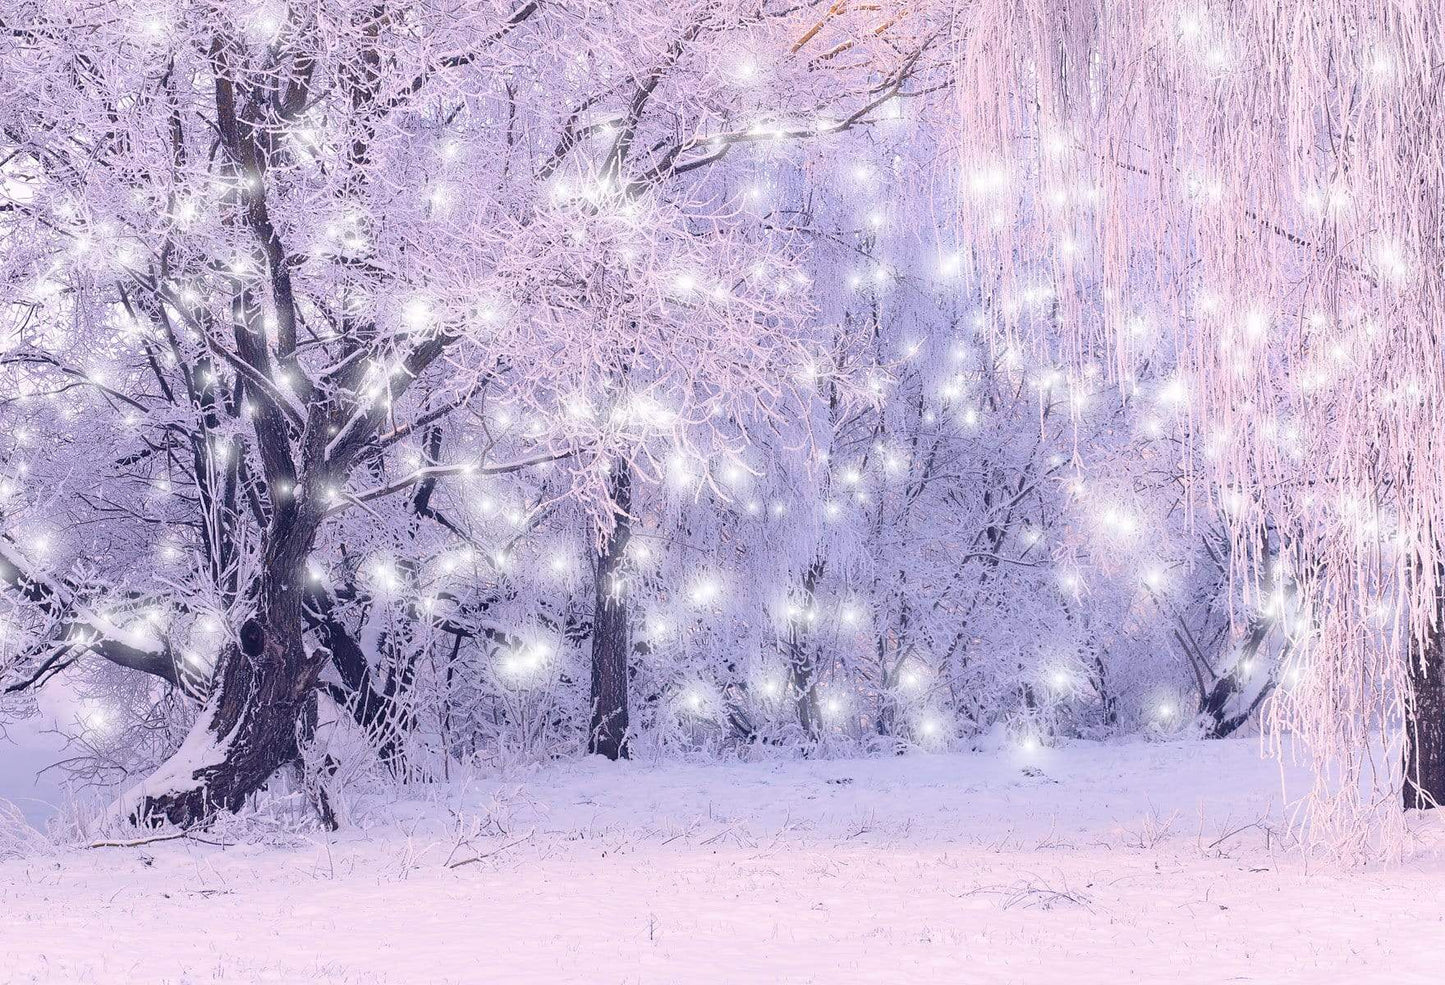 Xmas Snowflakes Winter Trees with hoarfrost Photo Studio Backdrop GC-112